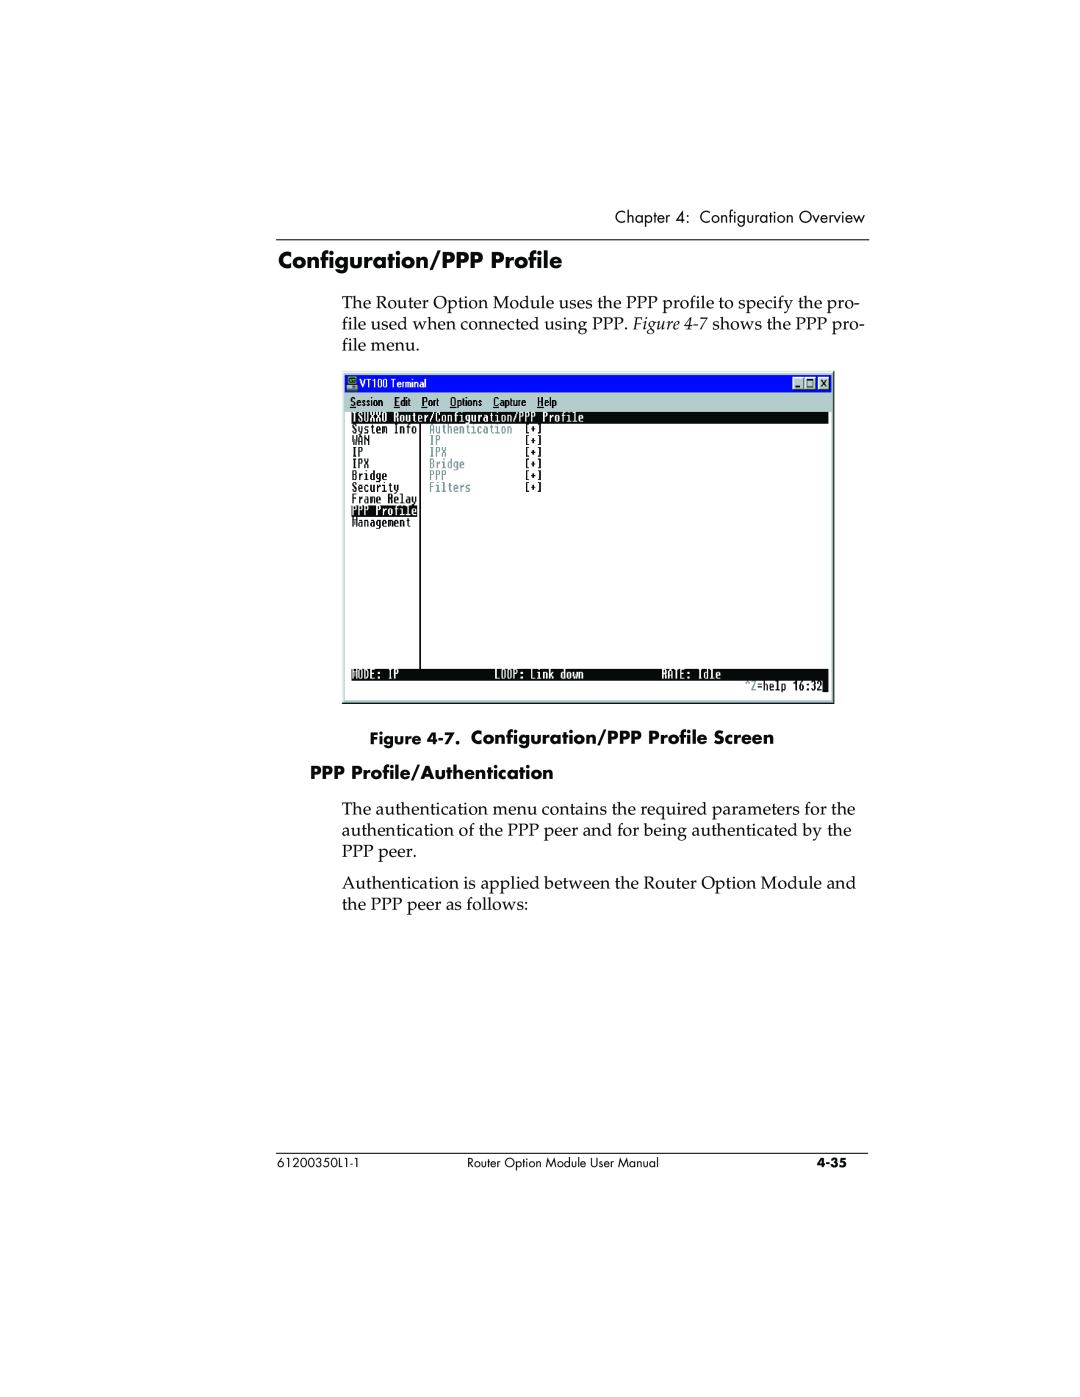 ADTRAN 1200350L1 user manual 7. Configuration/PPP Profile Screen, PPP Profile/Authentication 